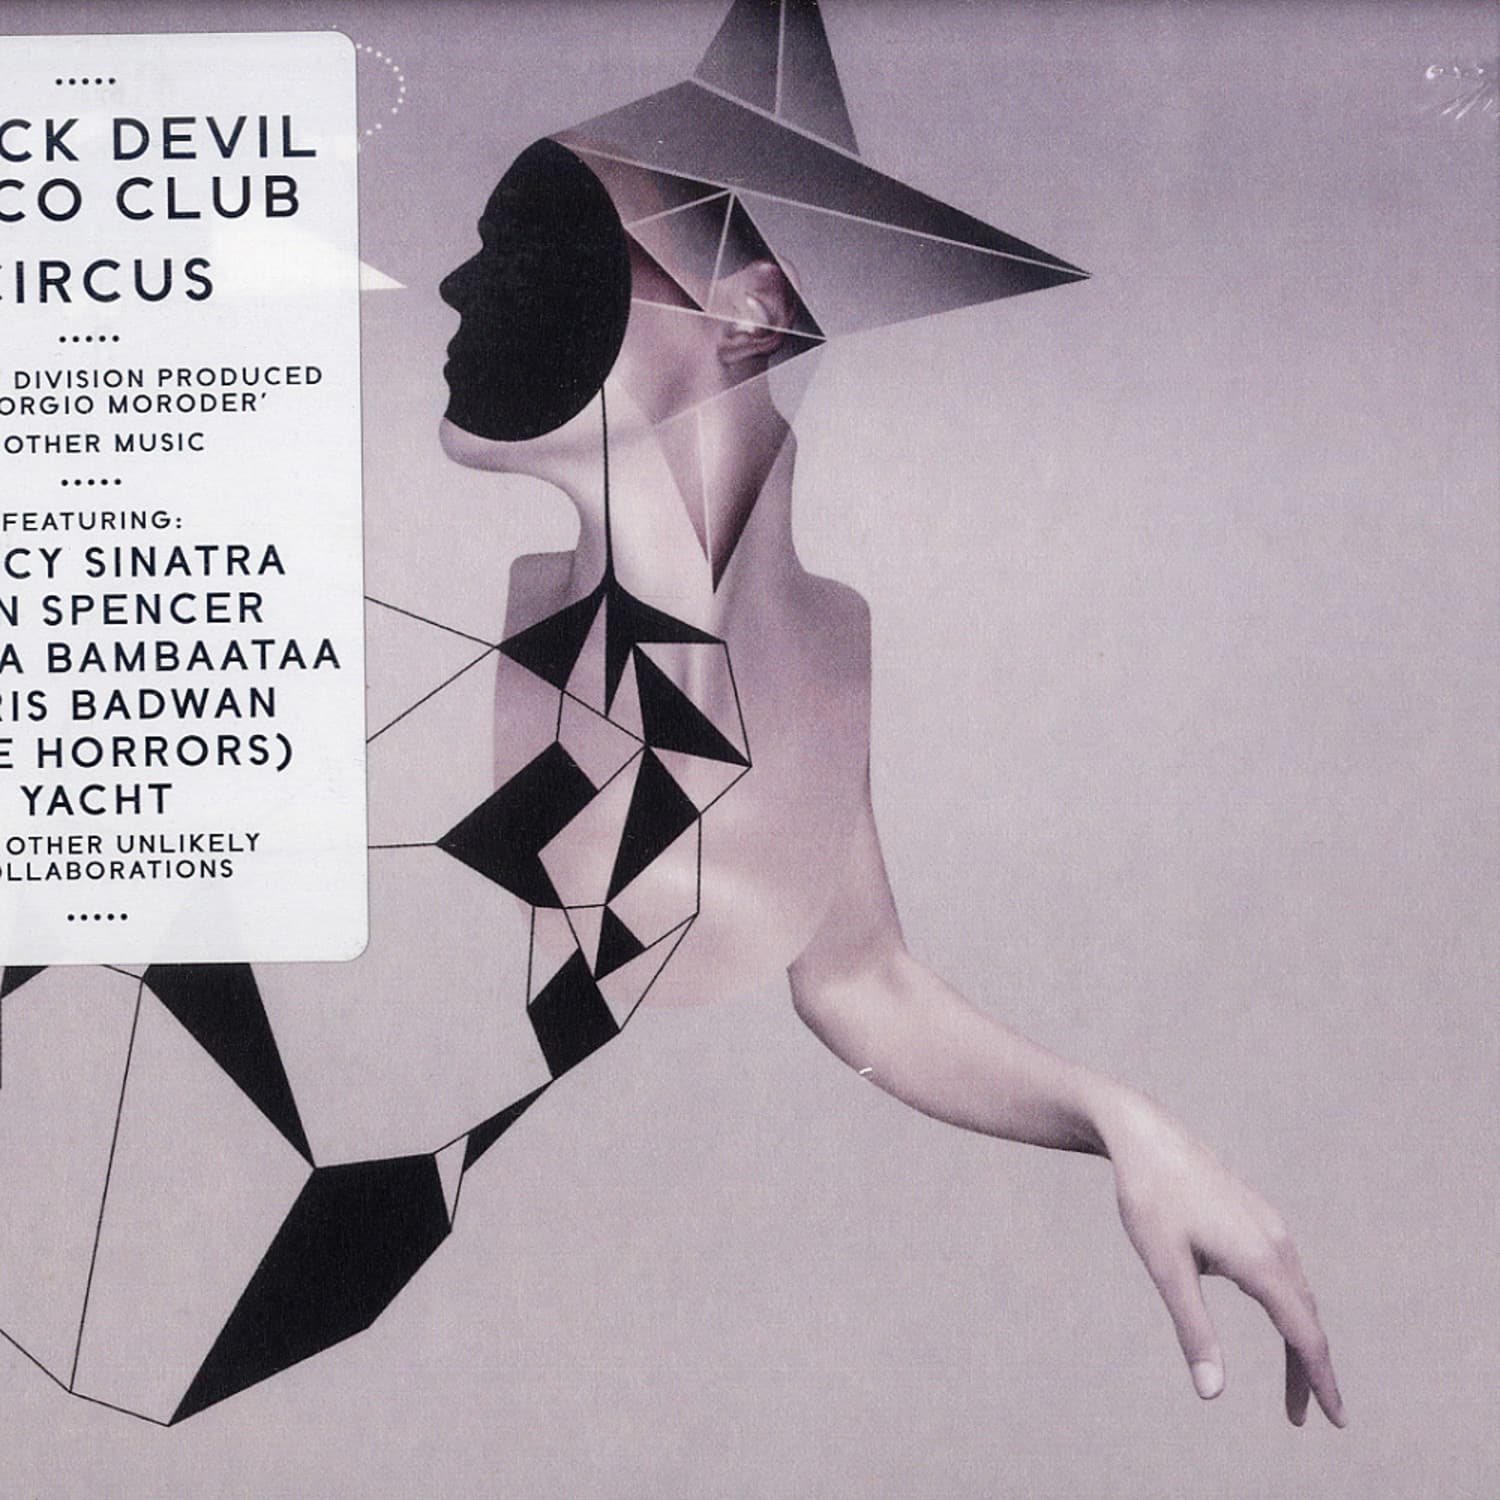 Black Devil Circus Club - CIRCUS 